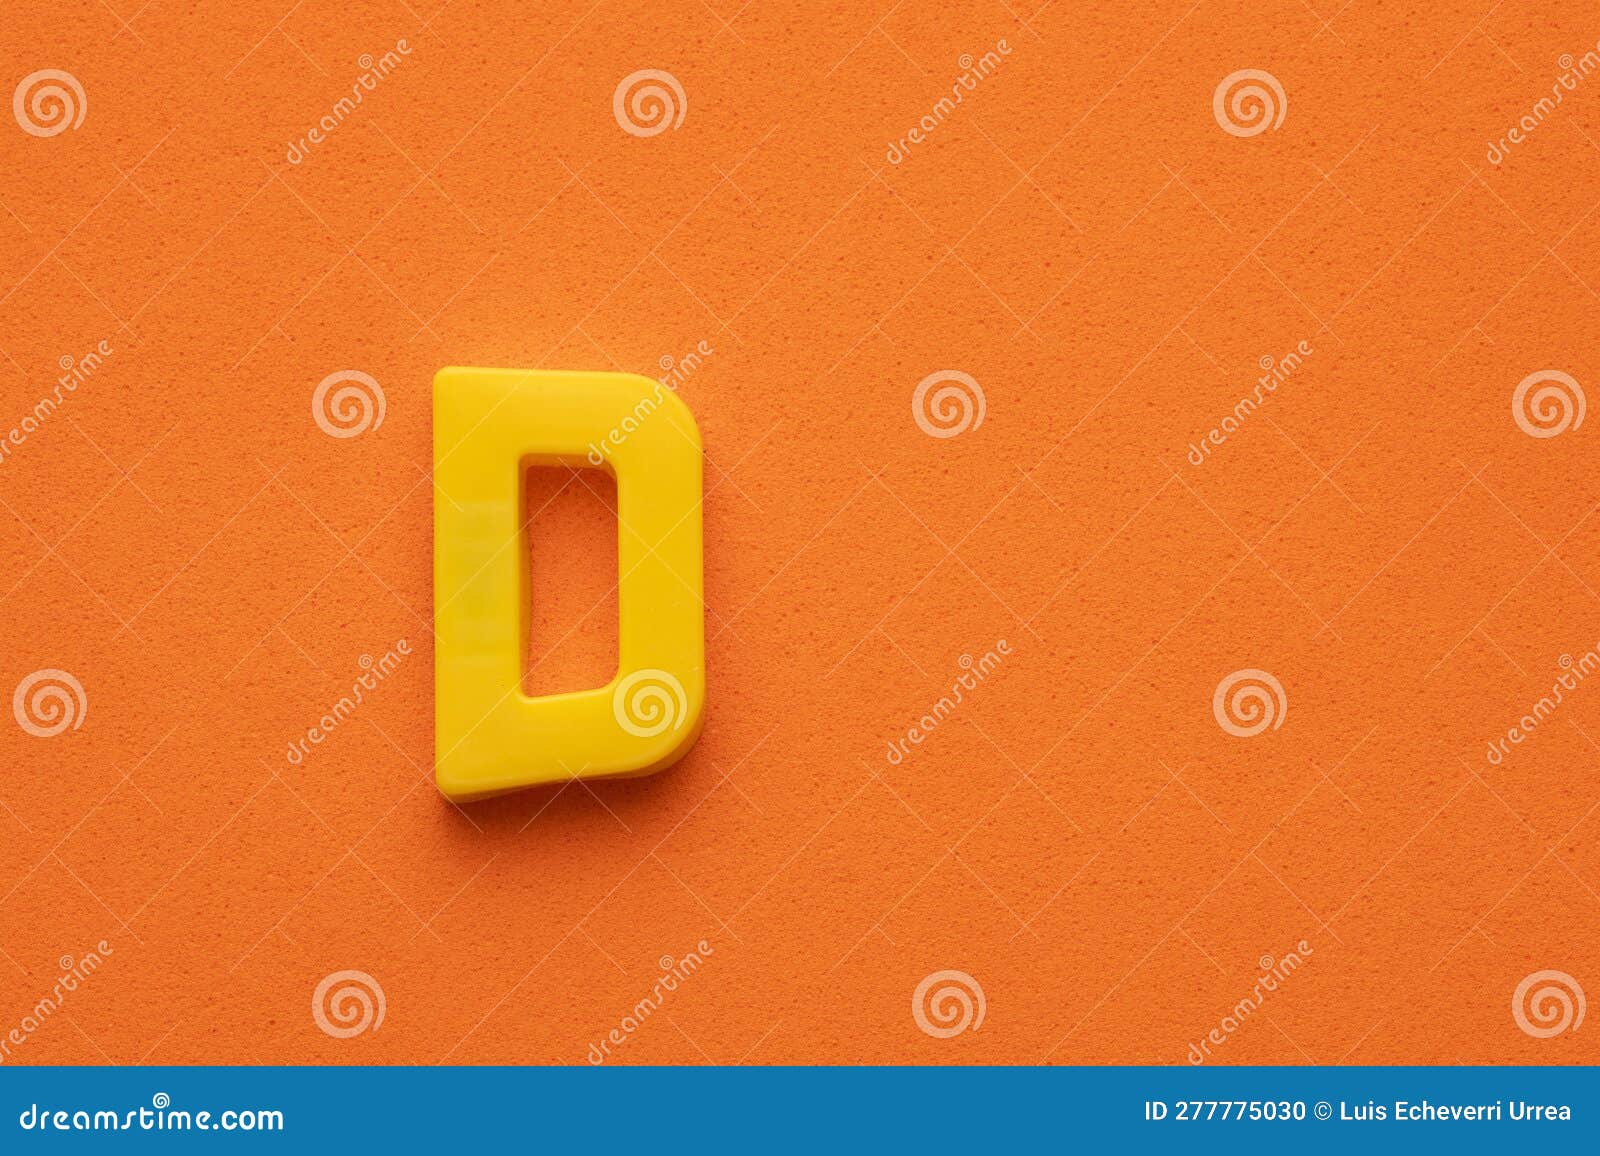 Yellow Plastic Letter D Uppercase on Orange Foamy Background Stock ...